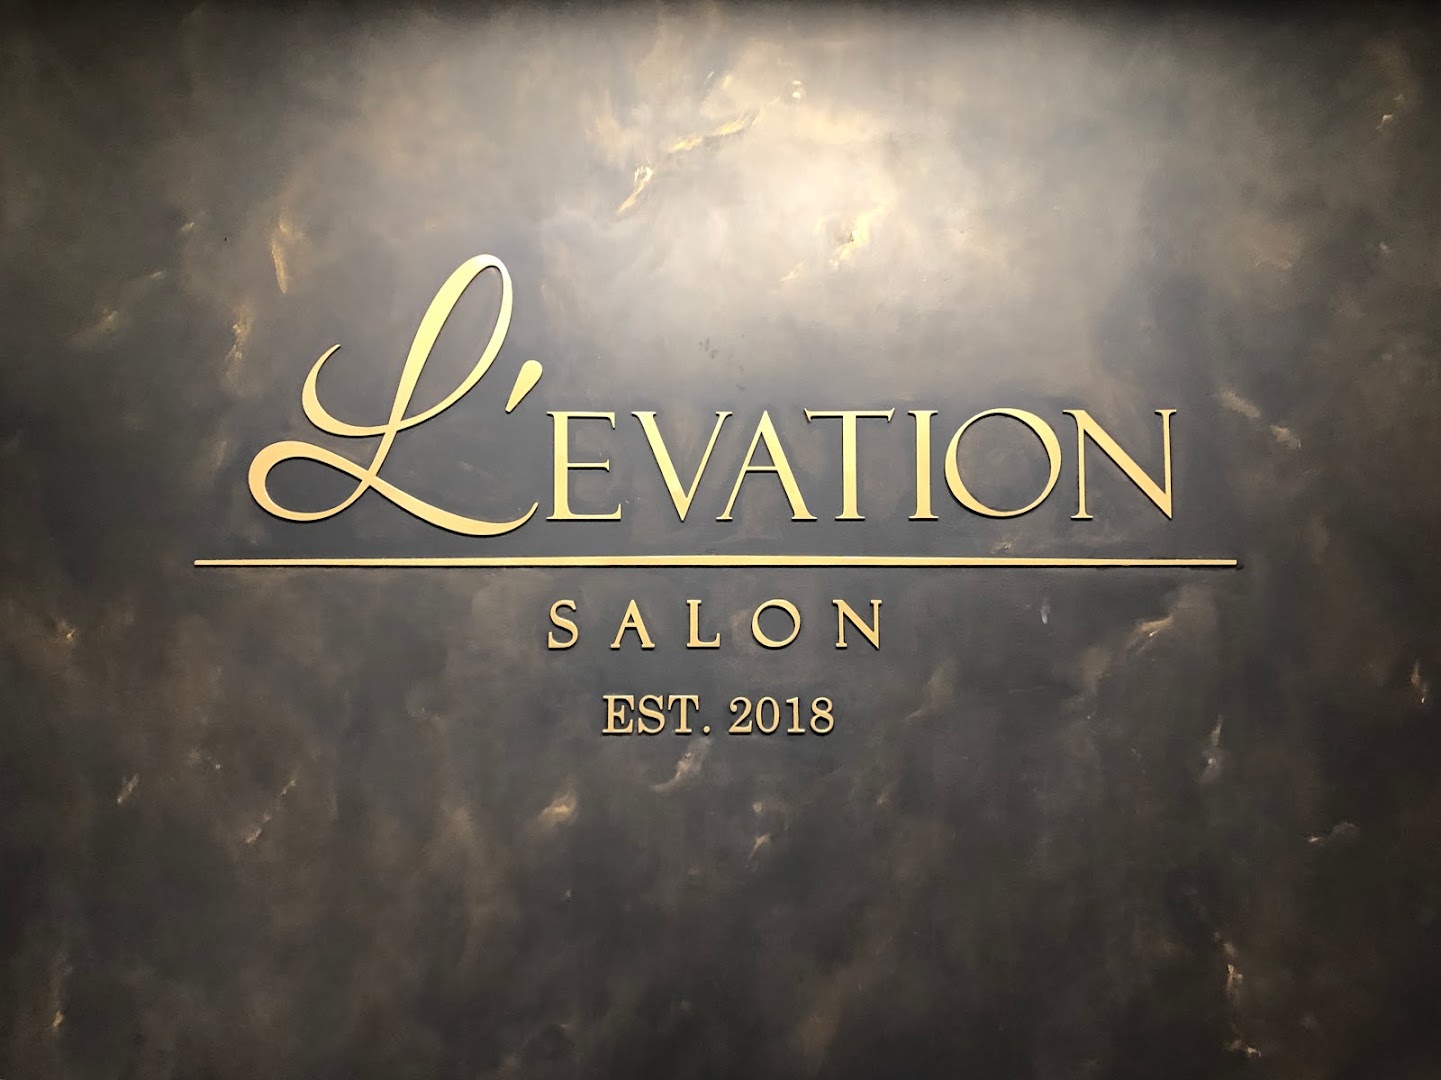 L'evation Salon